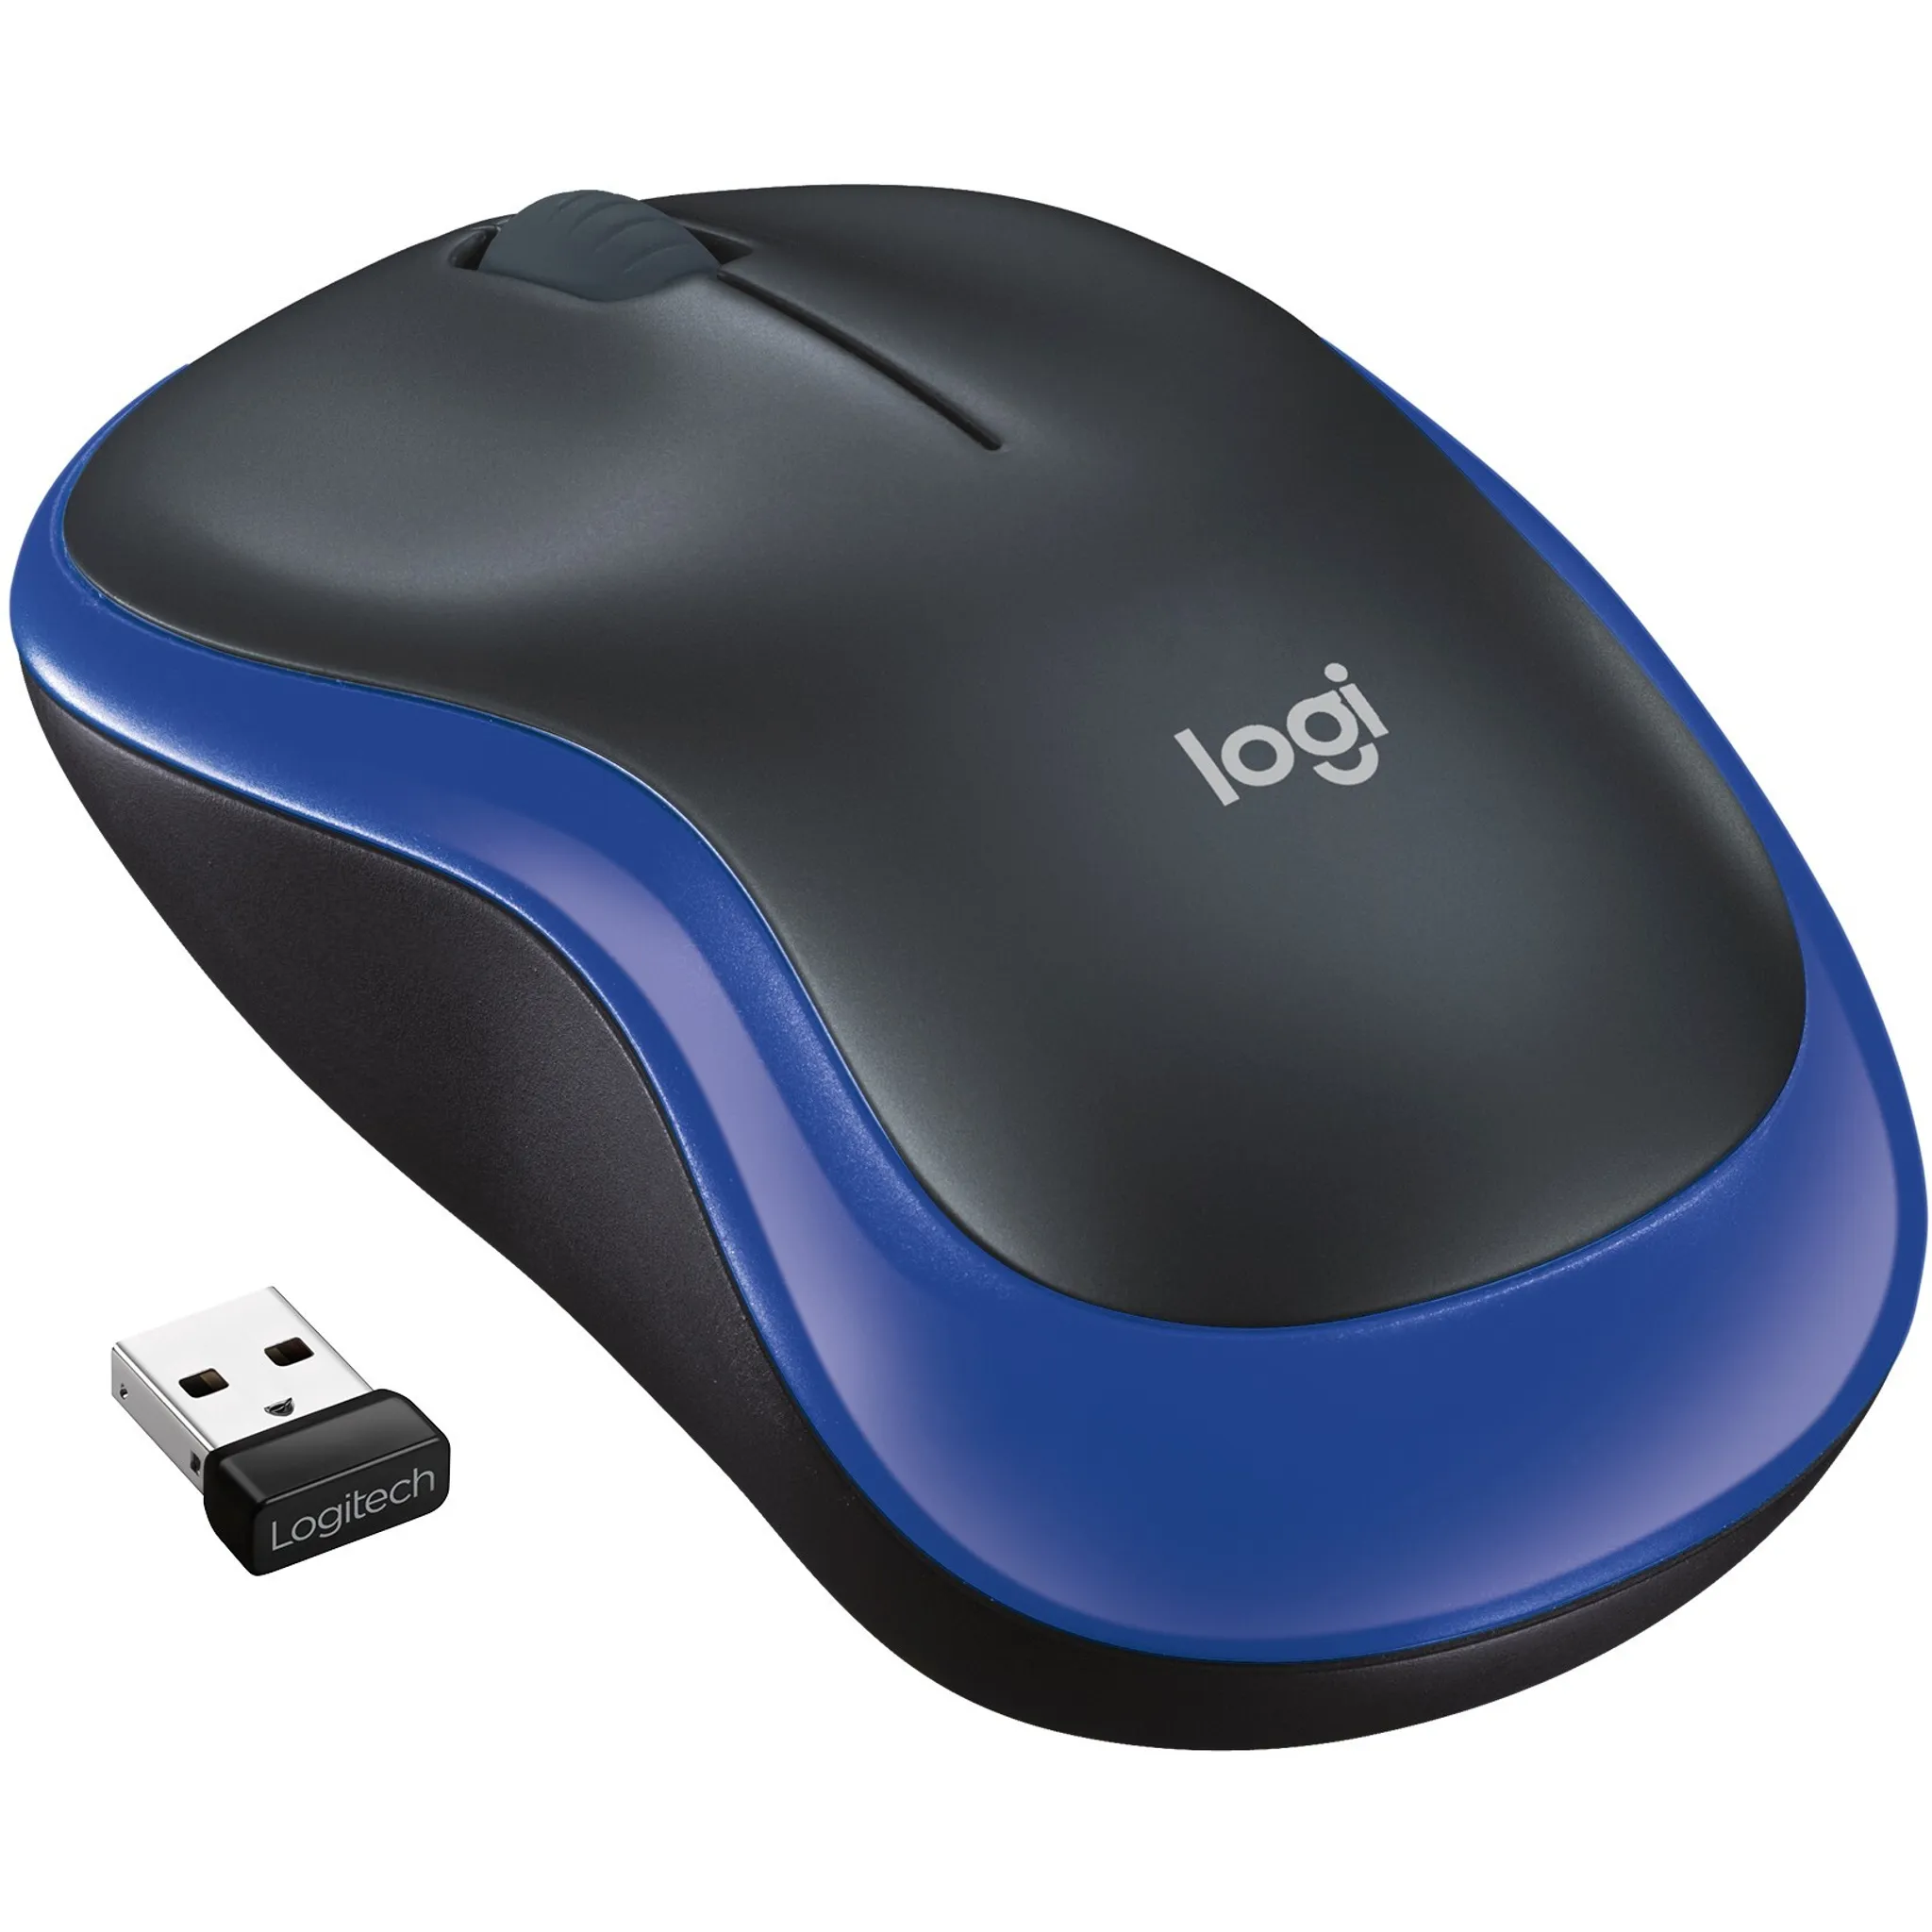 Logitech M 185 Cordless Notebook USB Mouse